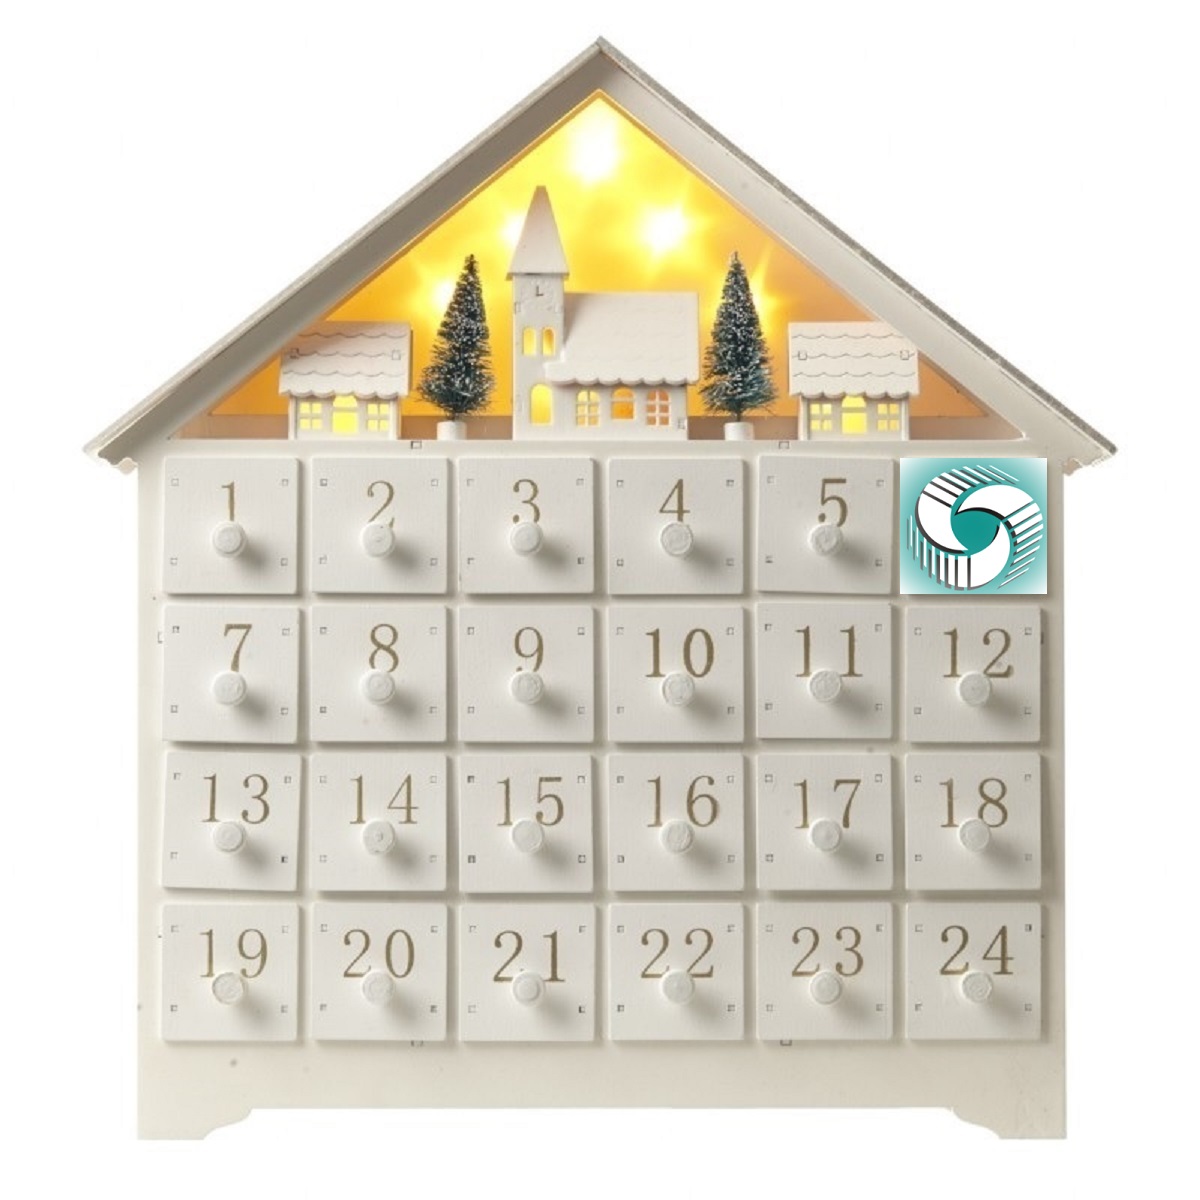 Day 6 – Frontier’s Advent Calendar